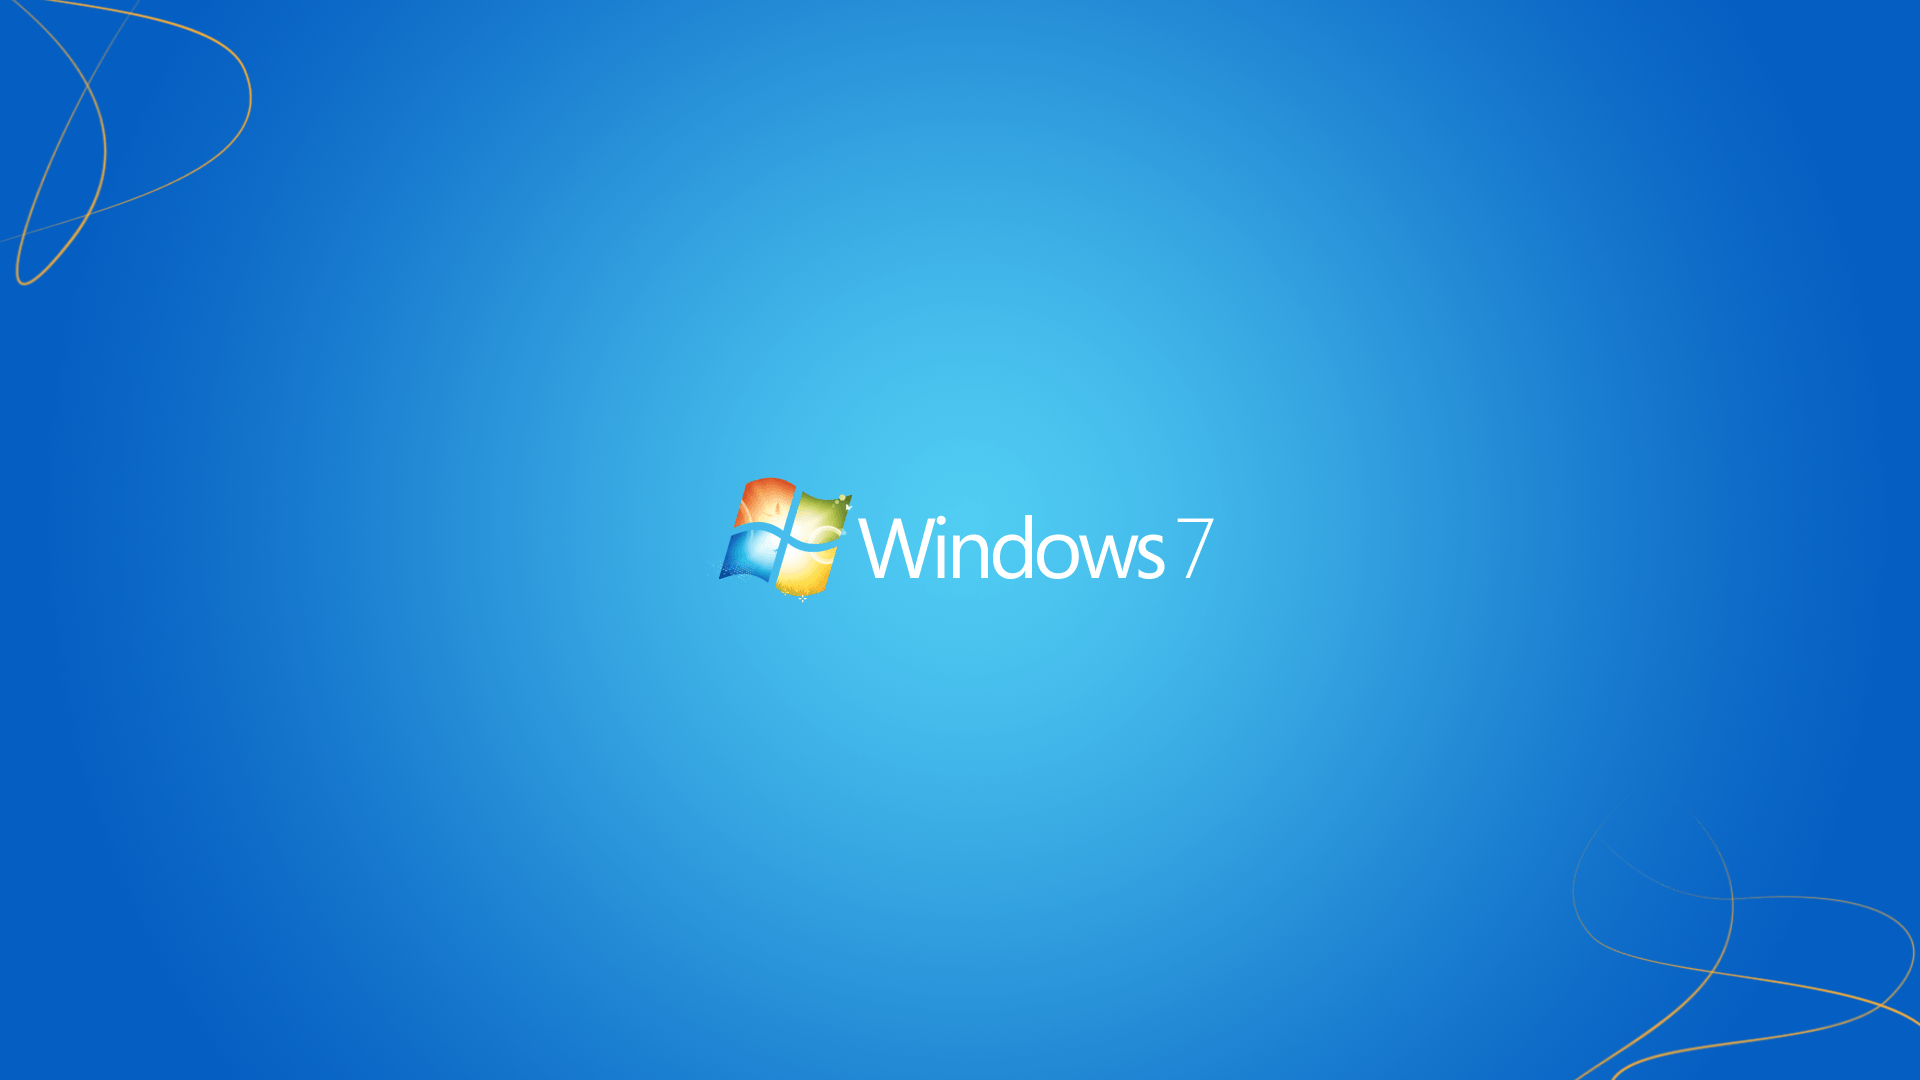 Windows_7_wallpaper__energy_bliss__by_scimiazzurro D5m3n20.png